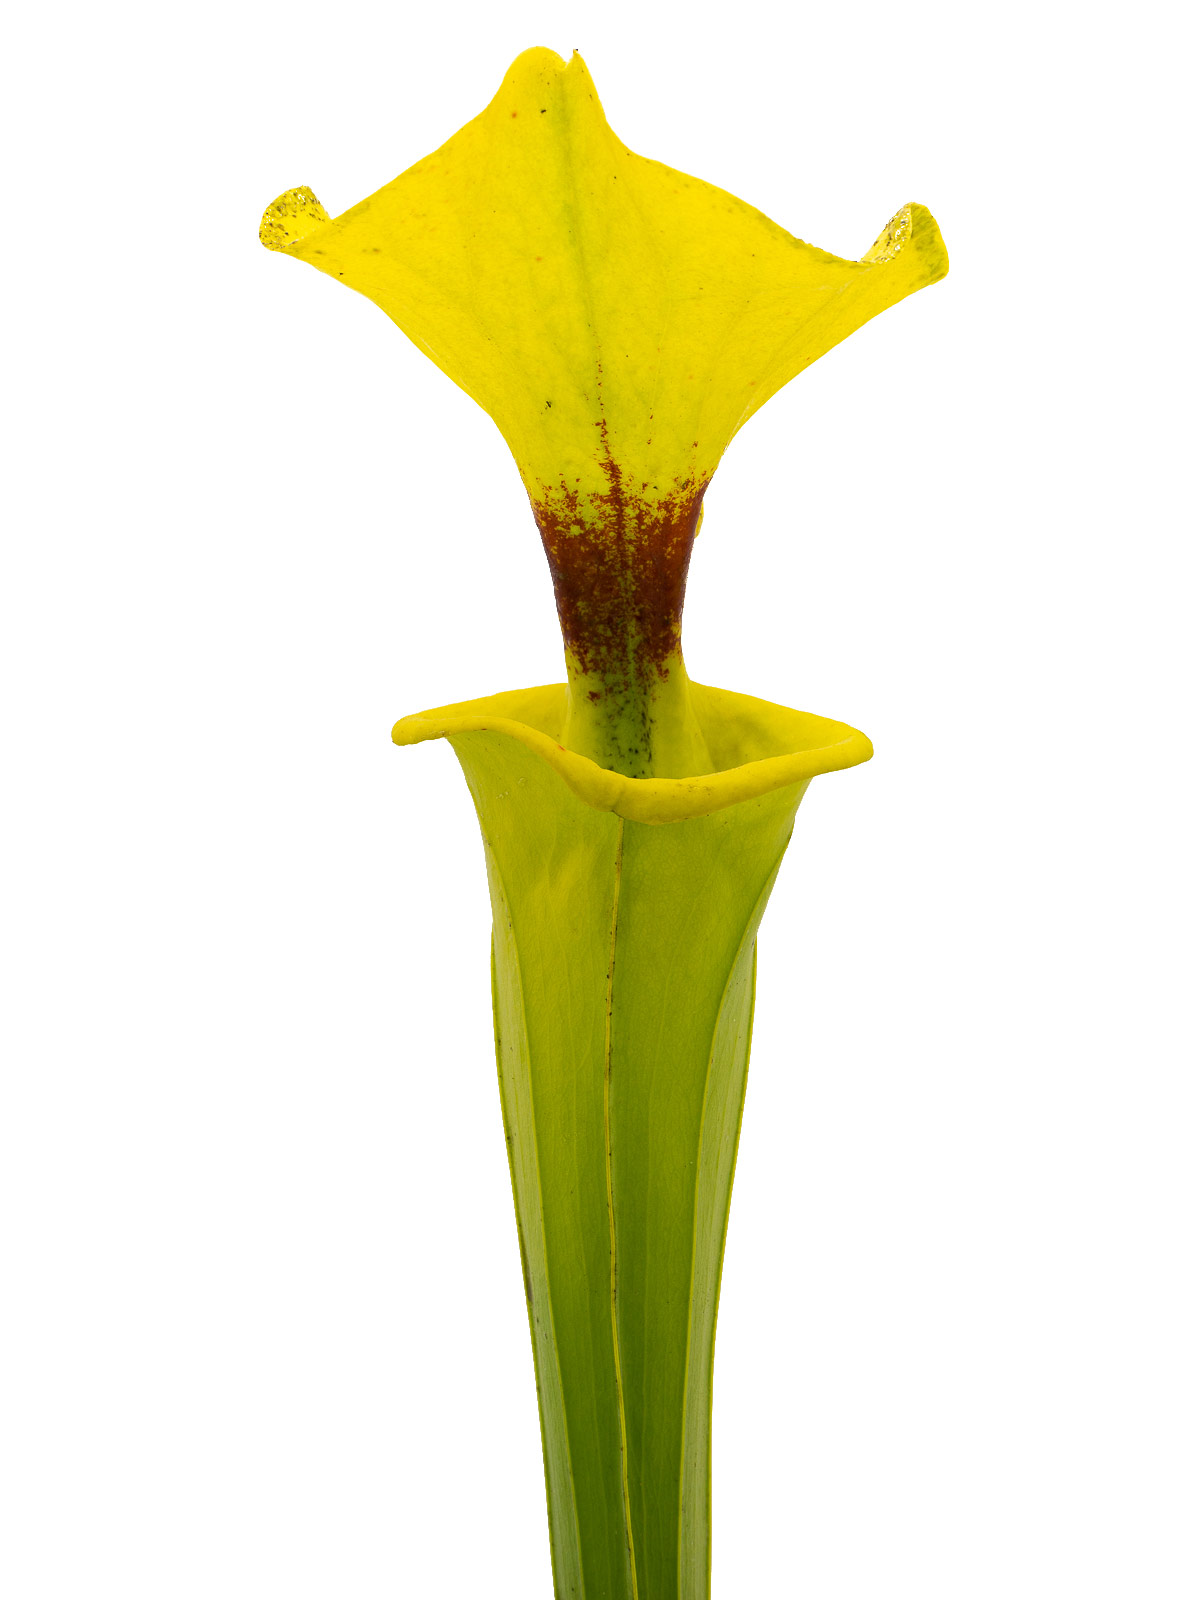 Sarracenia flava var. rugelii - MK F143, large pitcher, Reading University, ex Alastair Culham